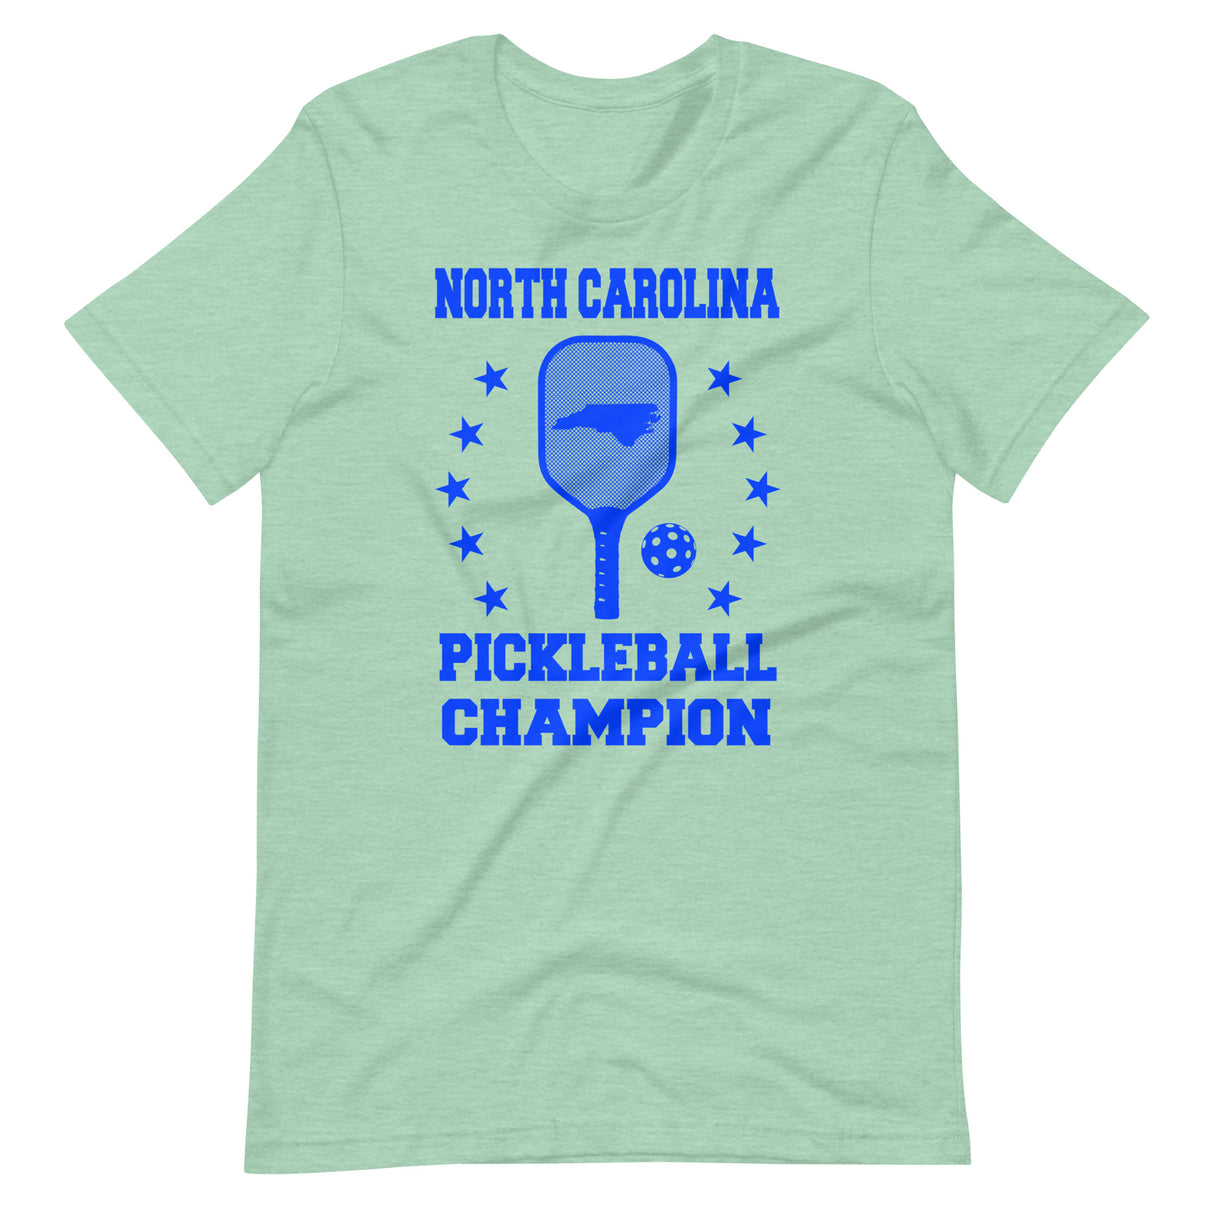 North Carolina Pickleball Champion Shirt